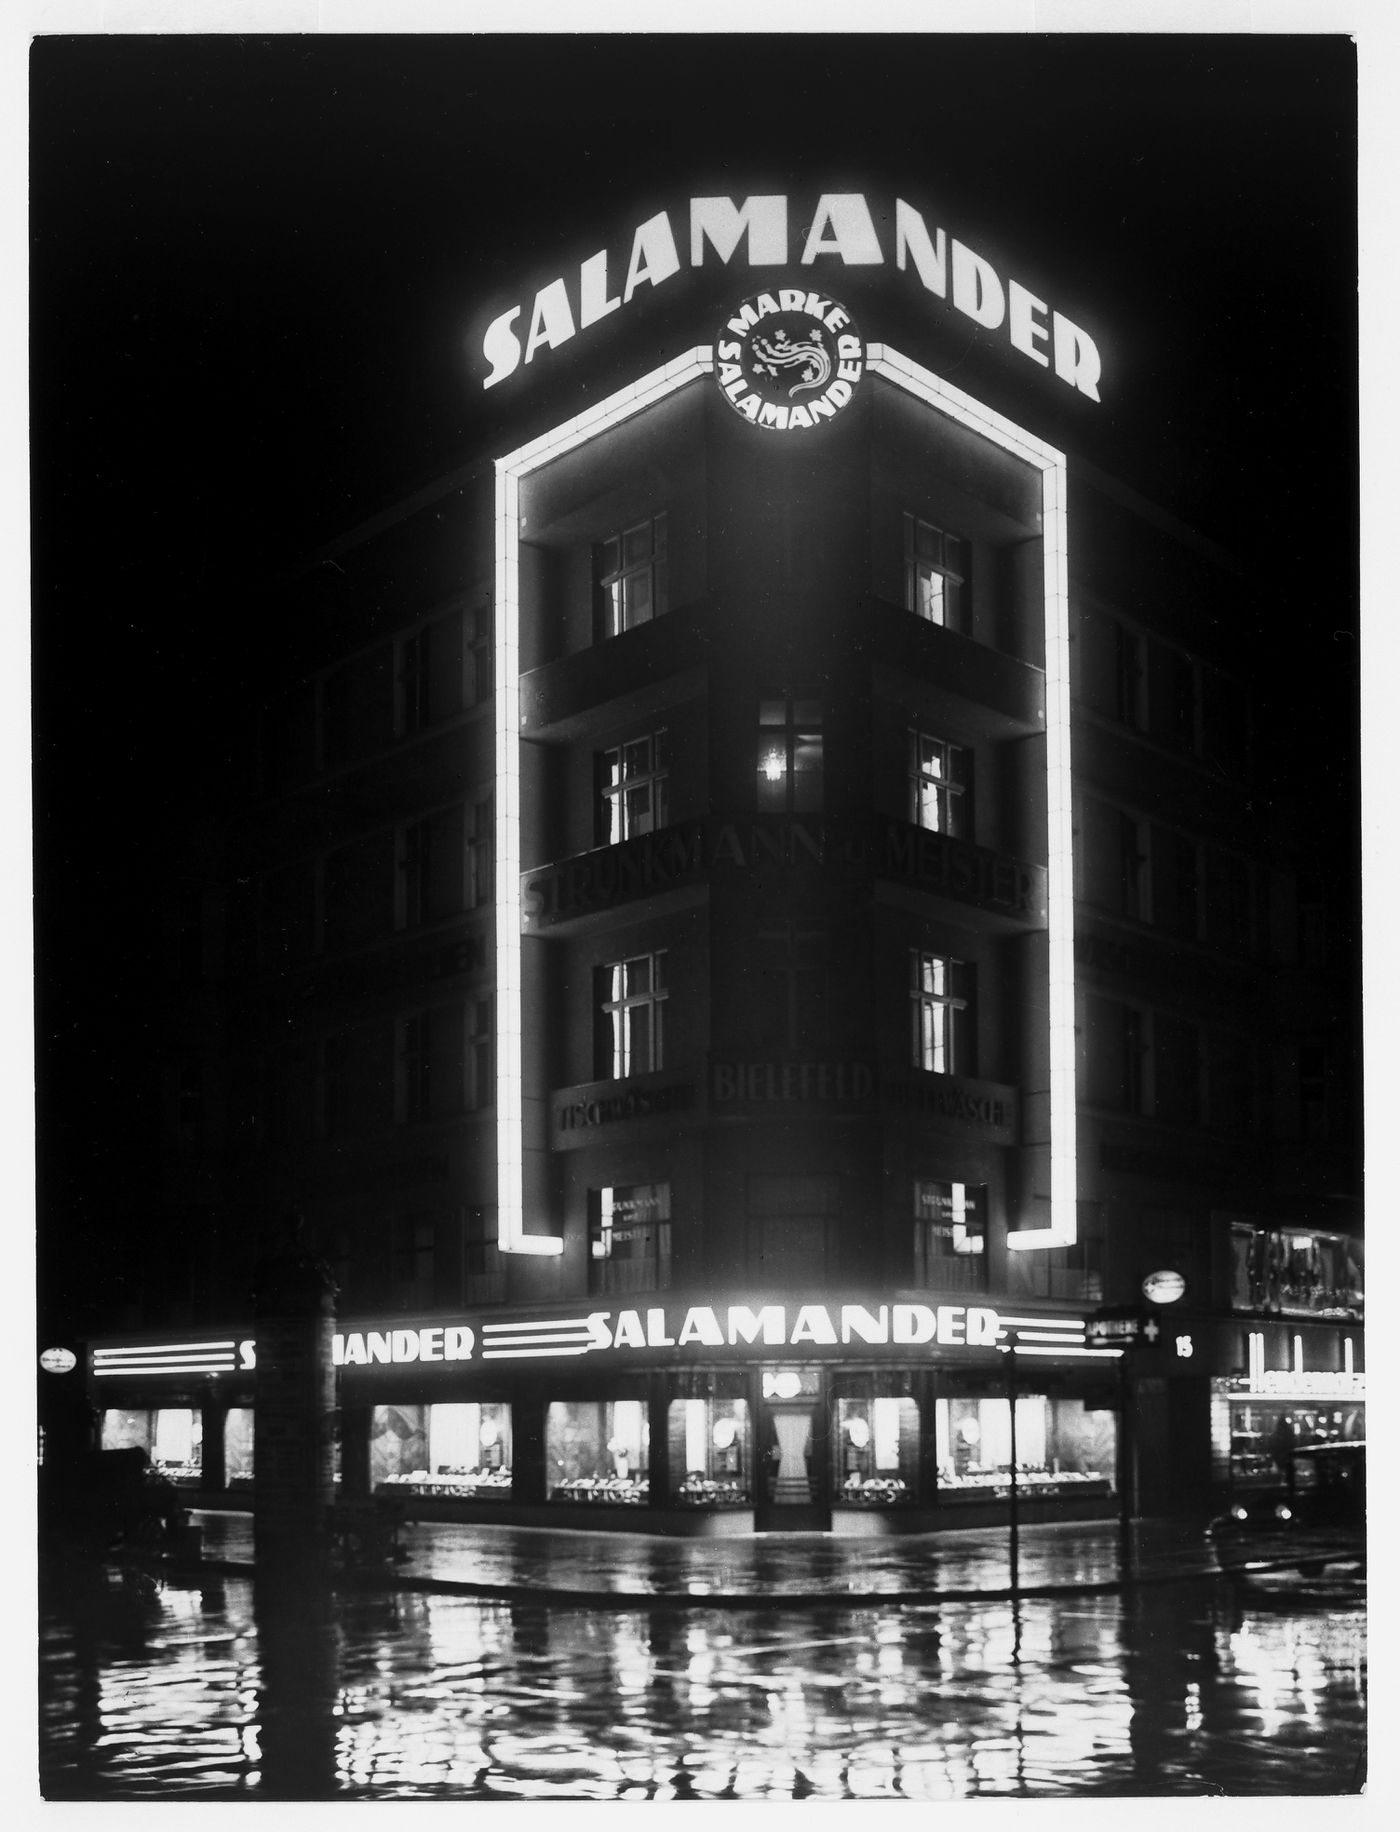 Illuminated night view of Salamander building, Germany